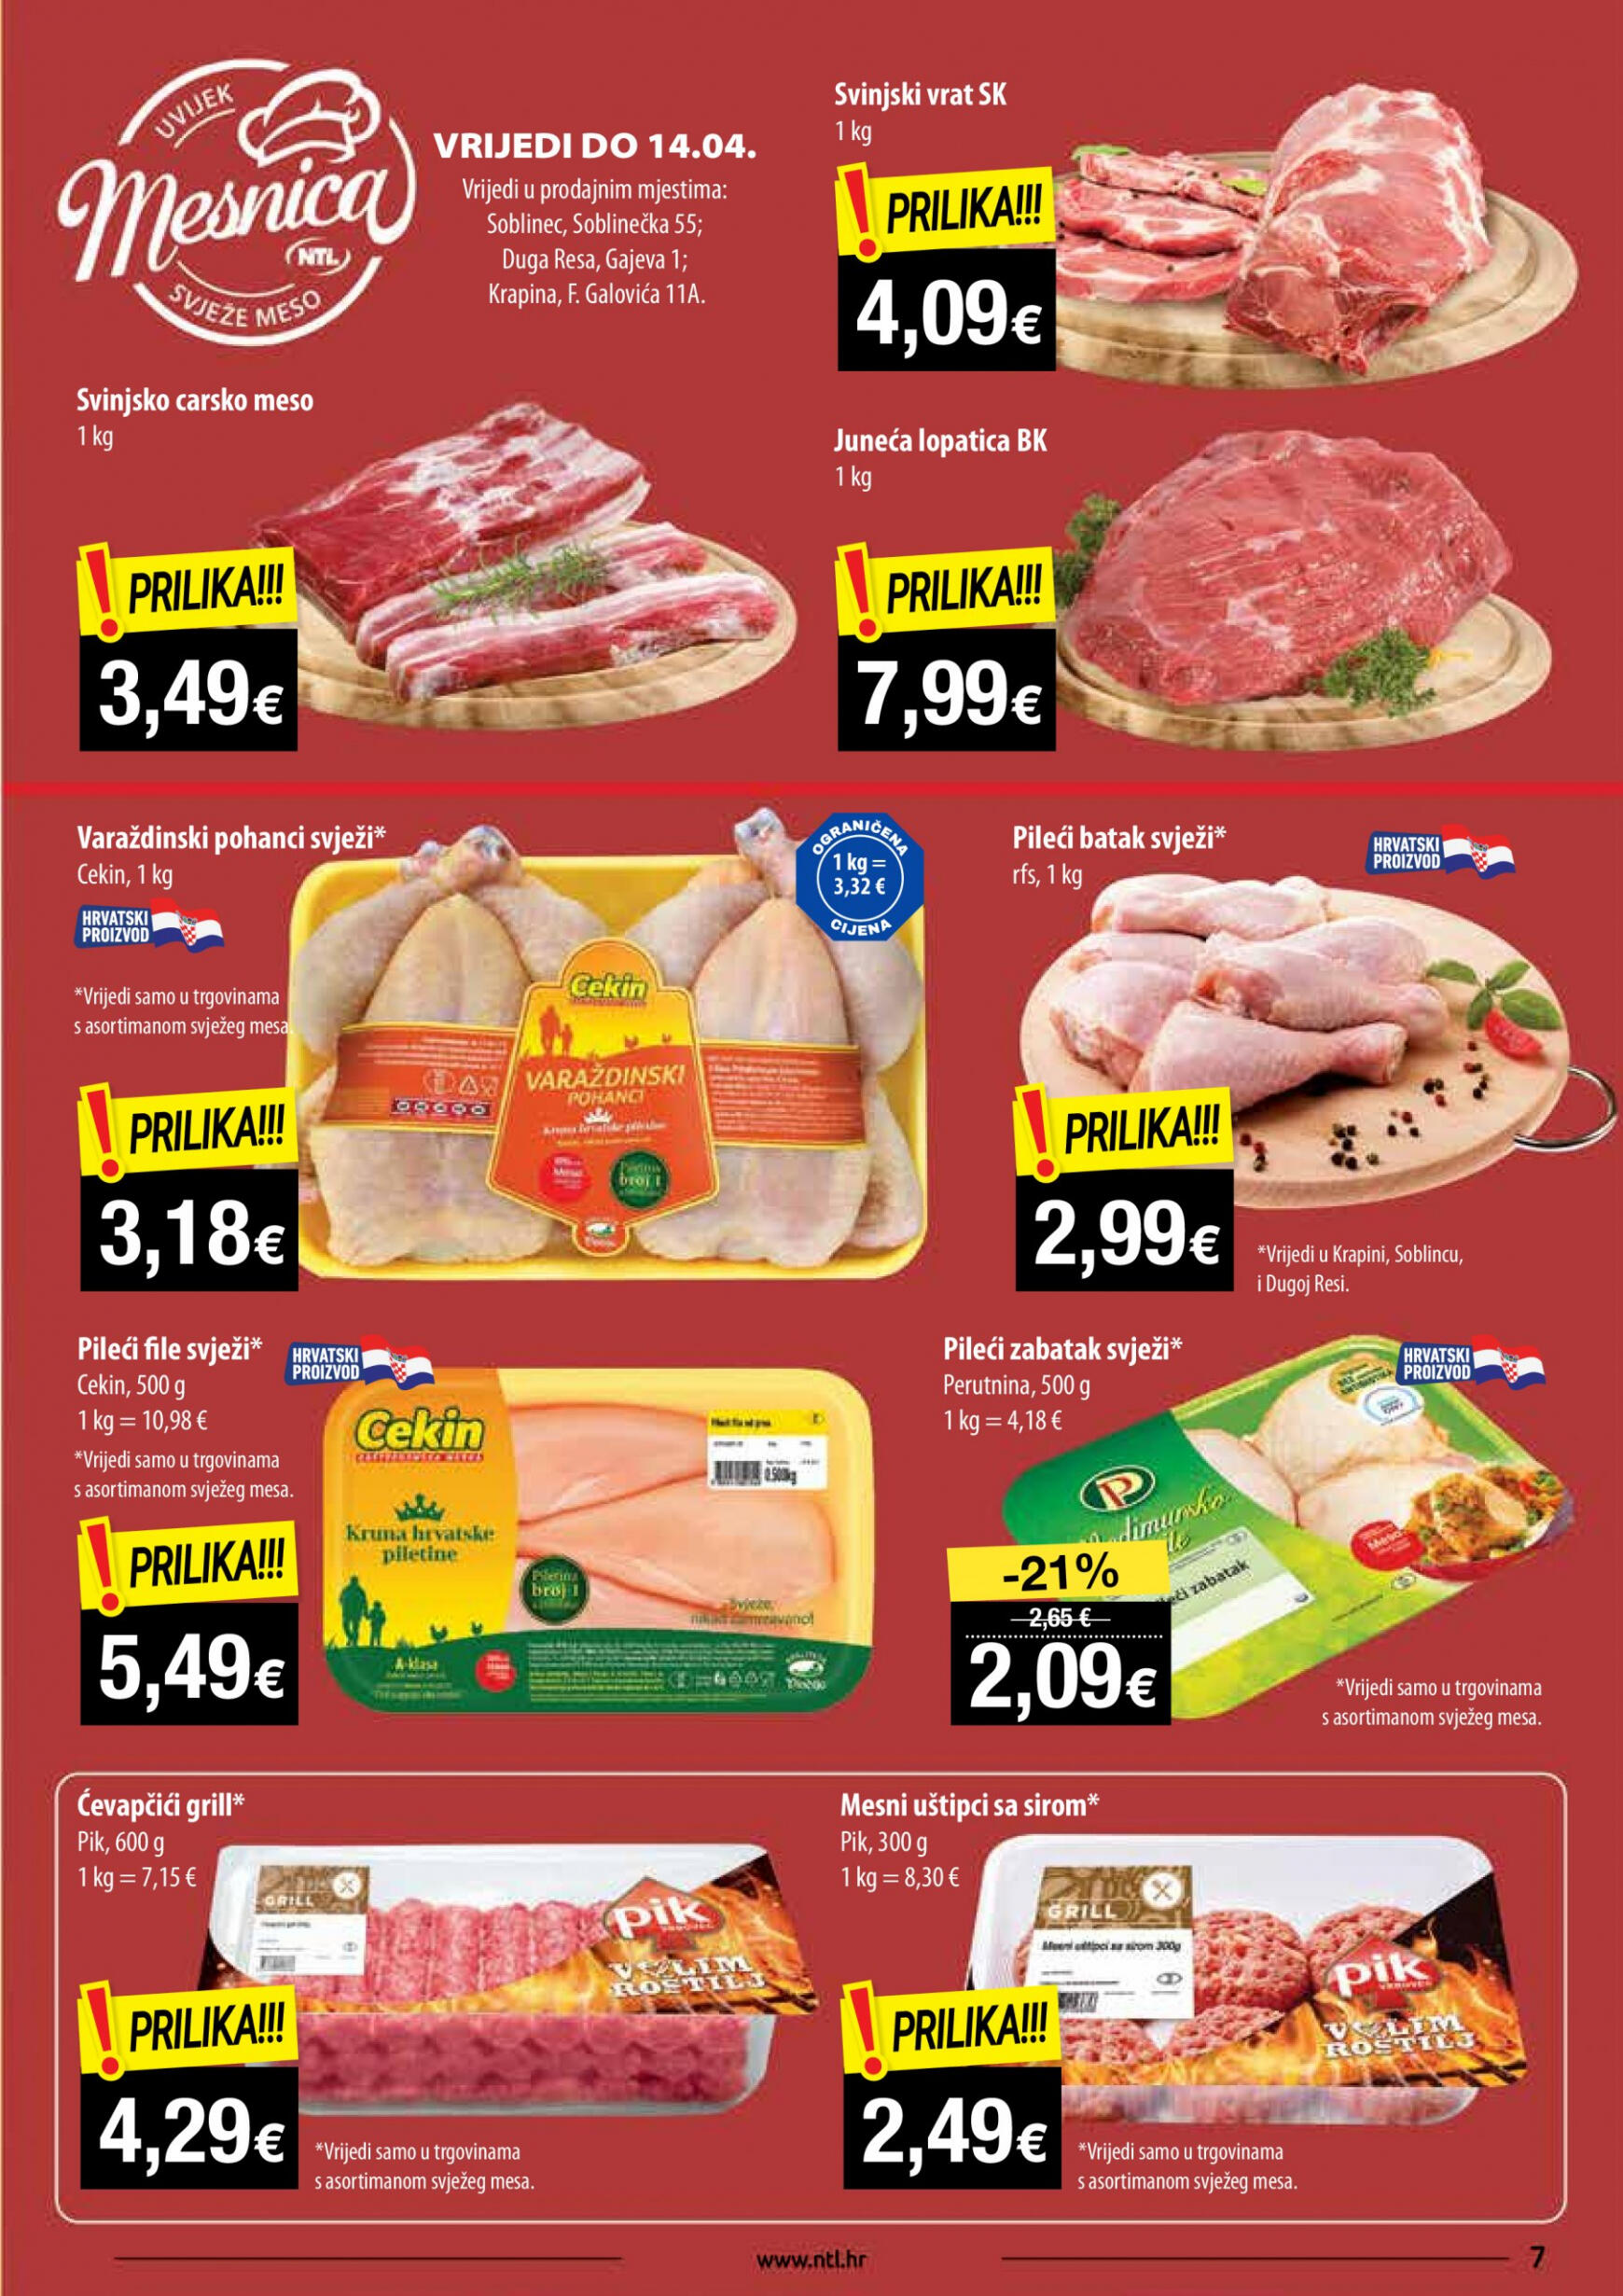 ntl - Novi katalog NTL - Supermarketi Soblinec, Krapina, Duga Resa 10.04. - 16.04. - page: 7